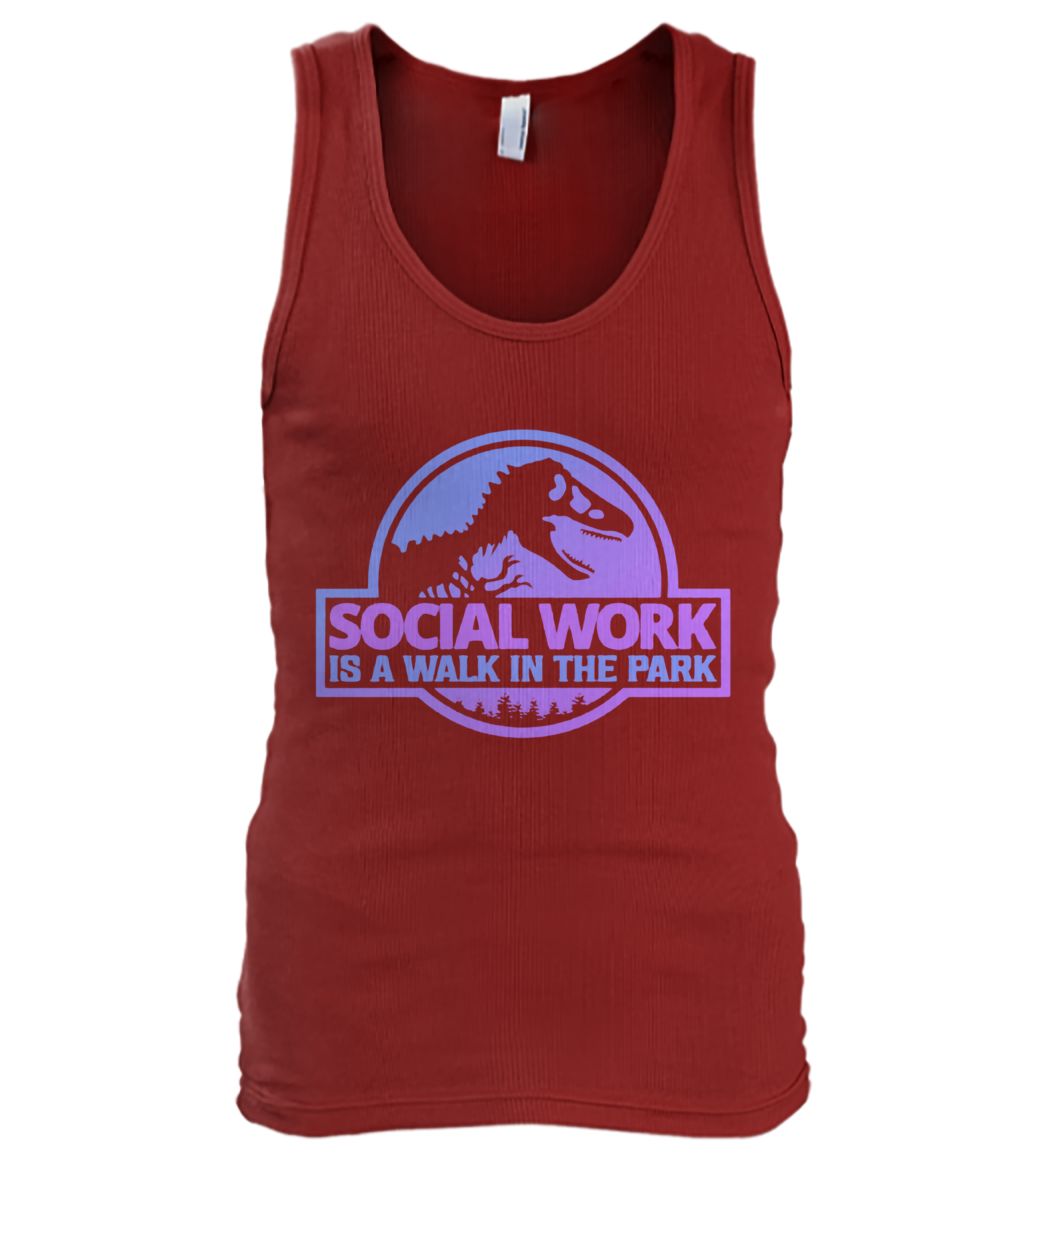 Jurassic social work is a walk in the park men's tank top